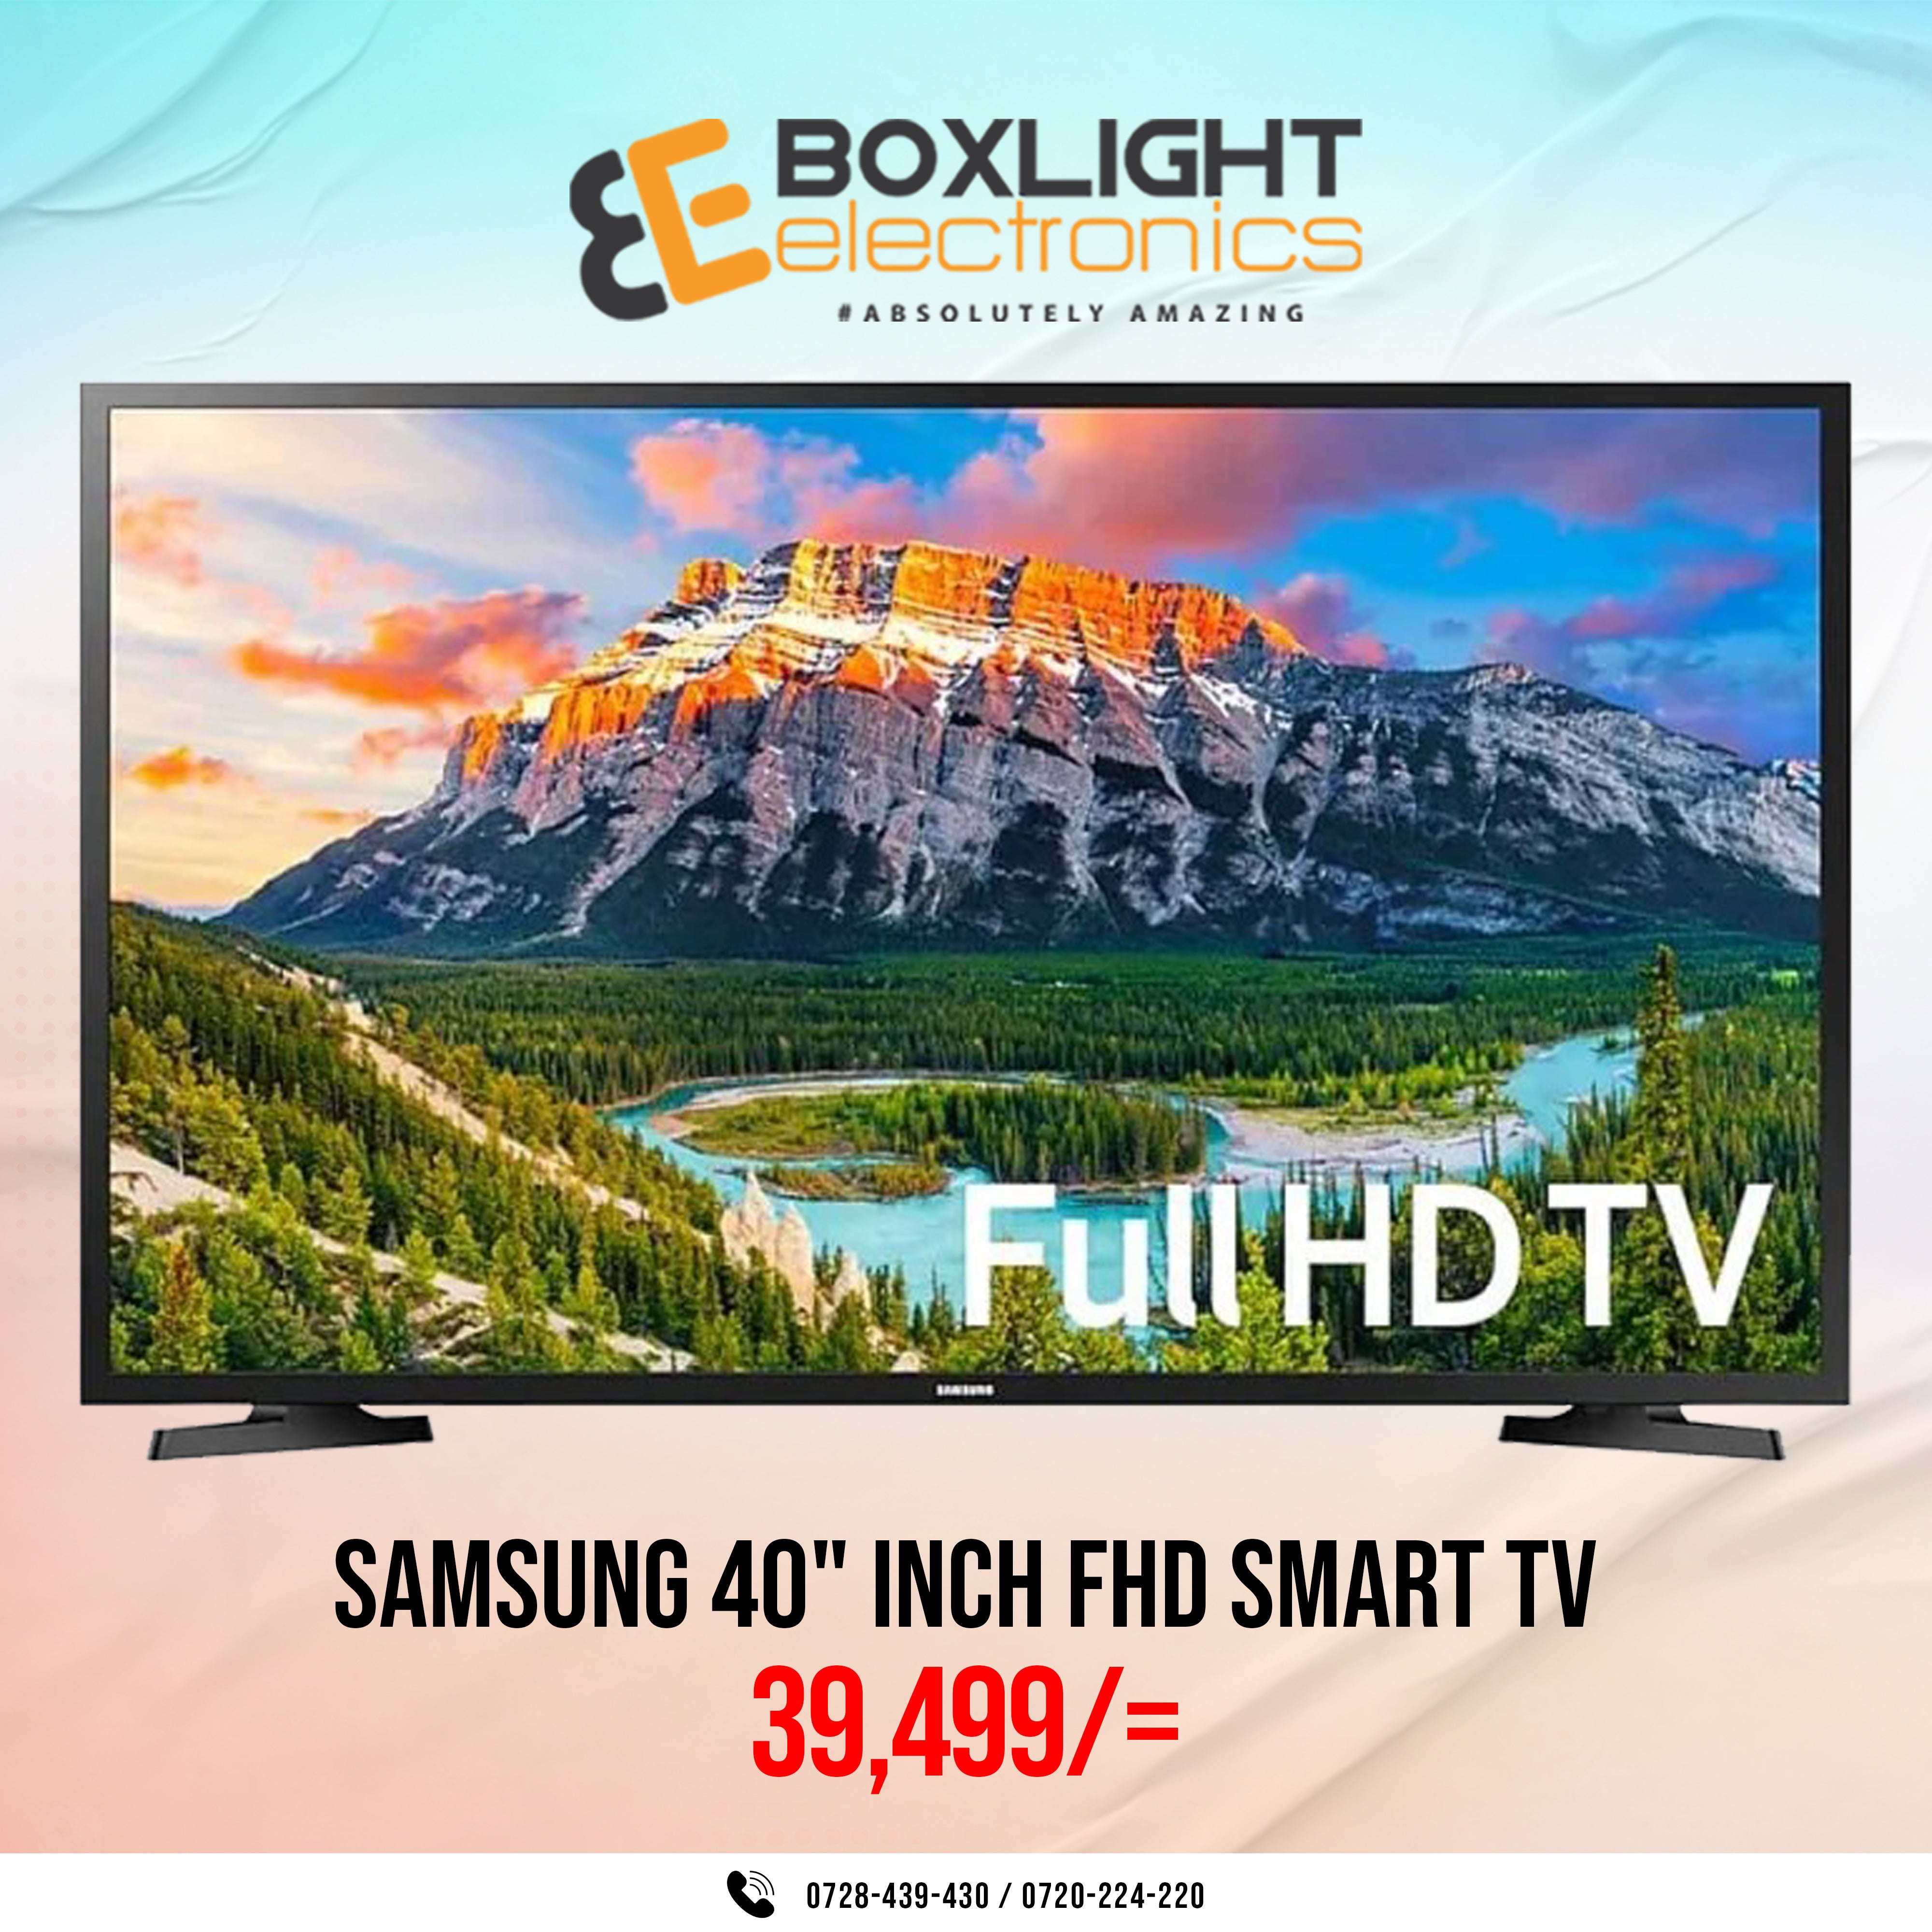 Samsung 40" Inch FHD Smart TV (40T5300)